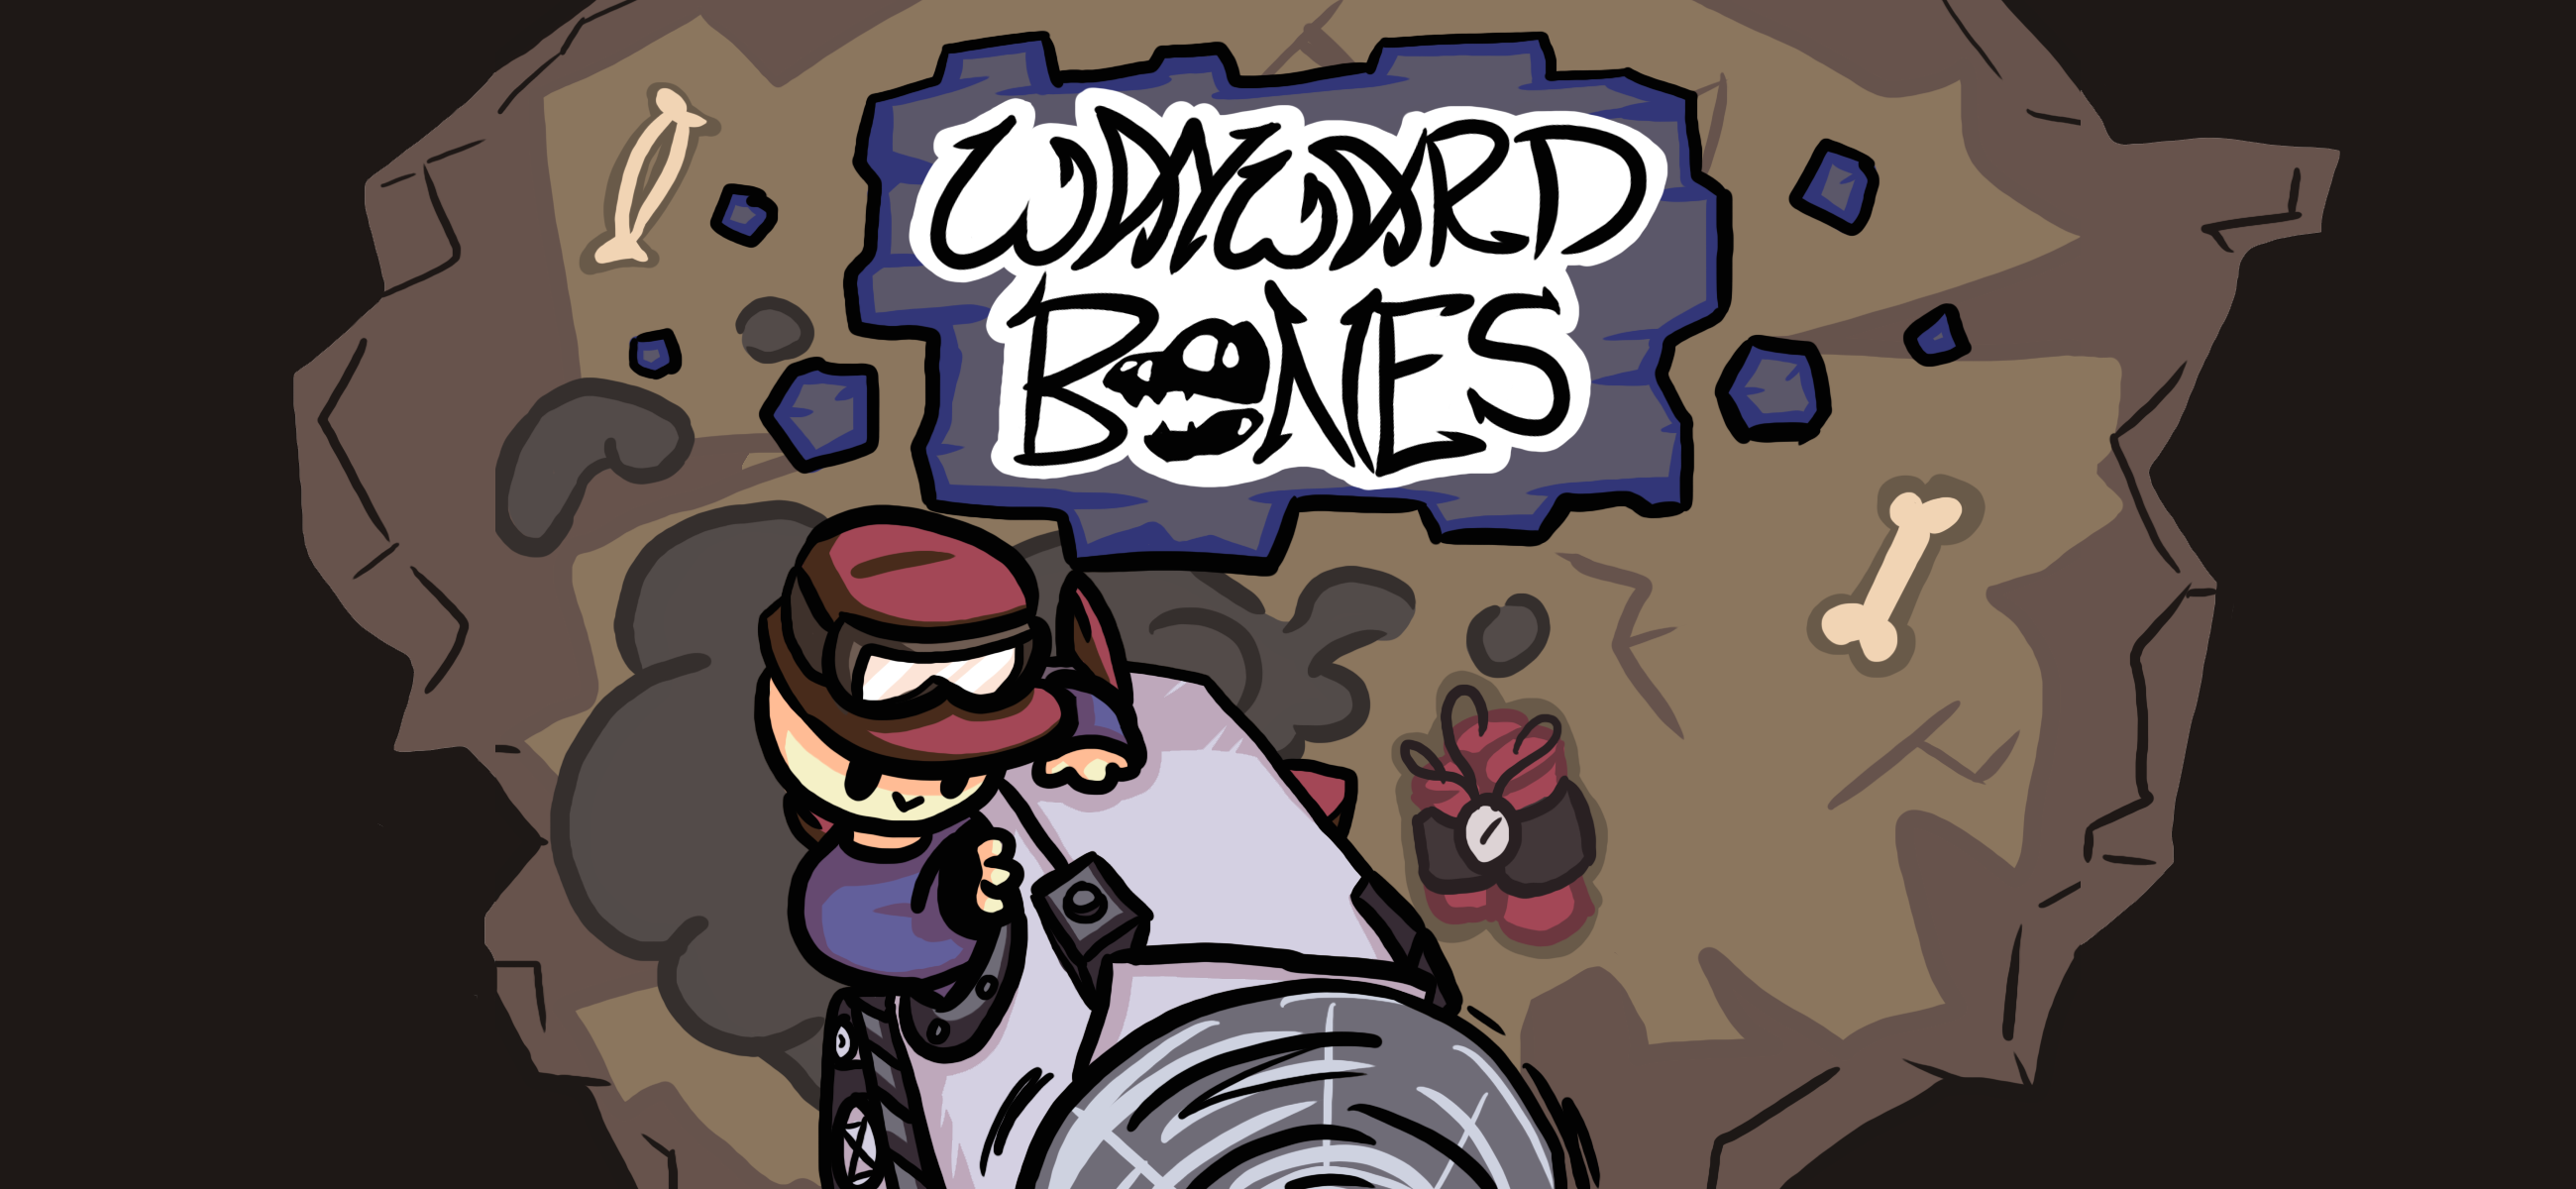 Wayward Bones